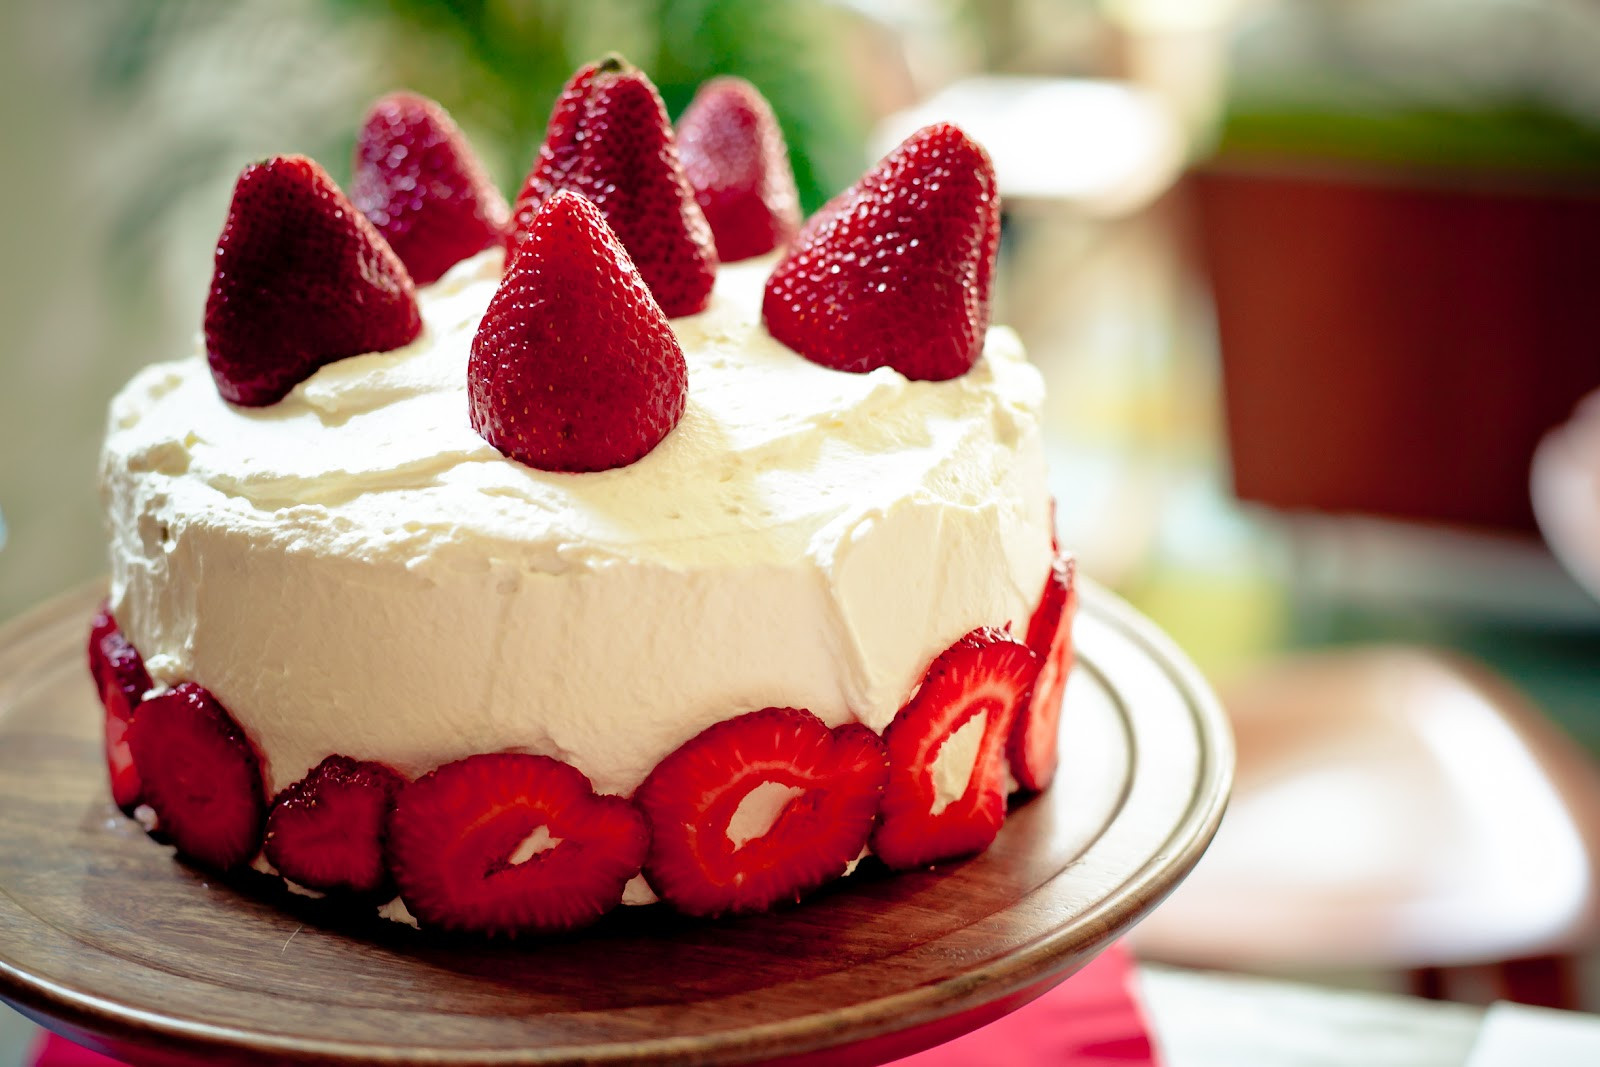 Best ideas about Strawberry Birthday Cake
. Save or Pin Food Twenty Four Seven Strawberry Birthday Cake Now.